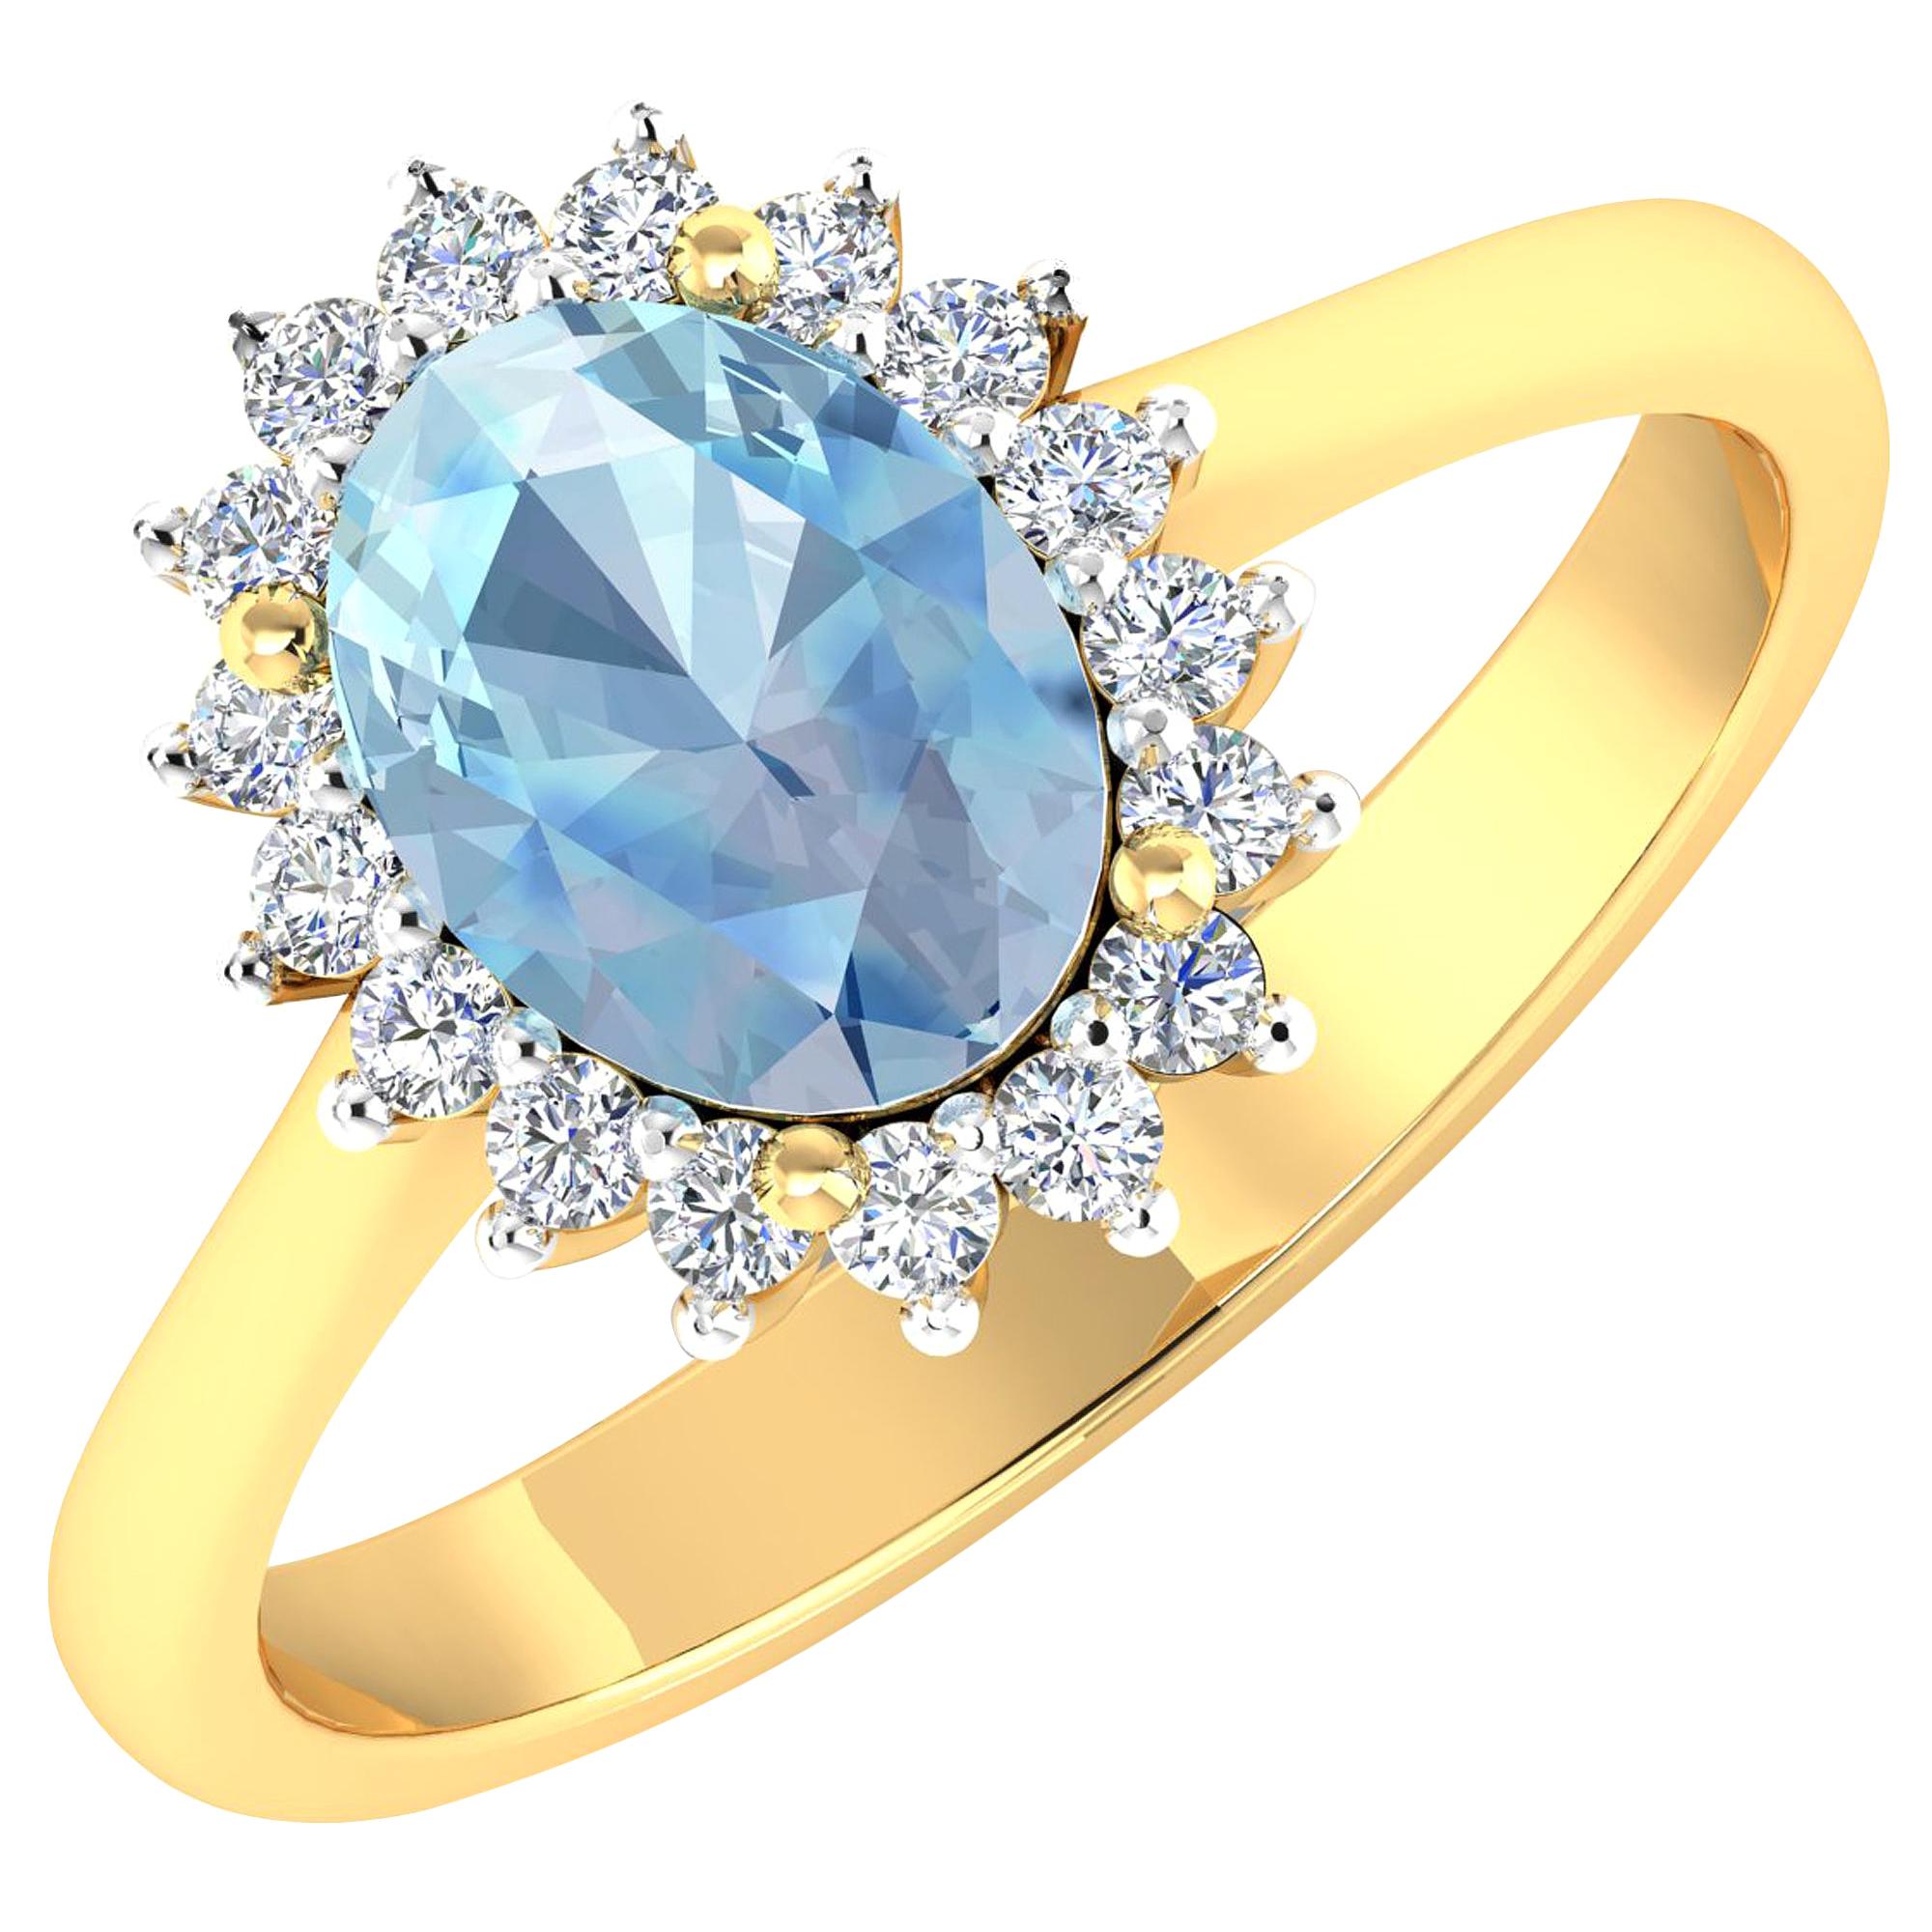 Aquamarine Gold Ring, 14 Karat Gold Aquamarine and Diamond Ring, 1.62 Carat For Sale